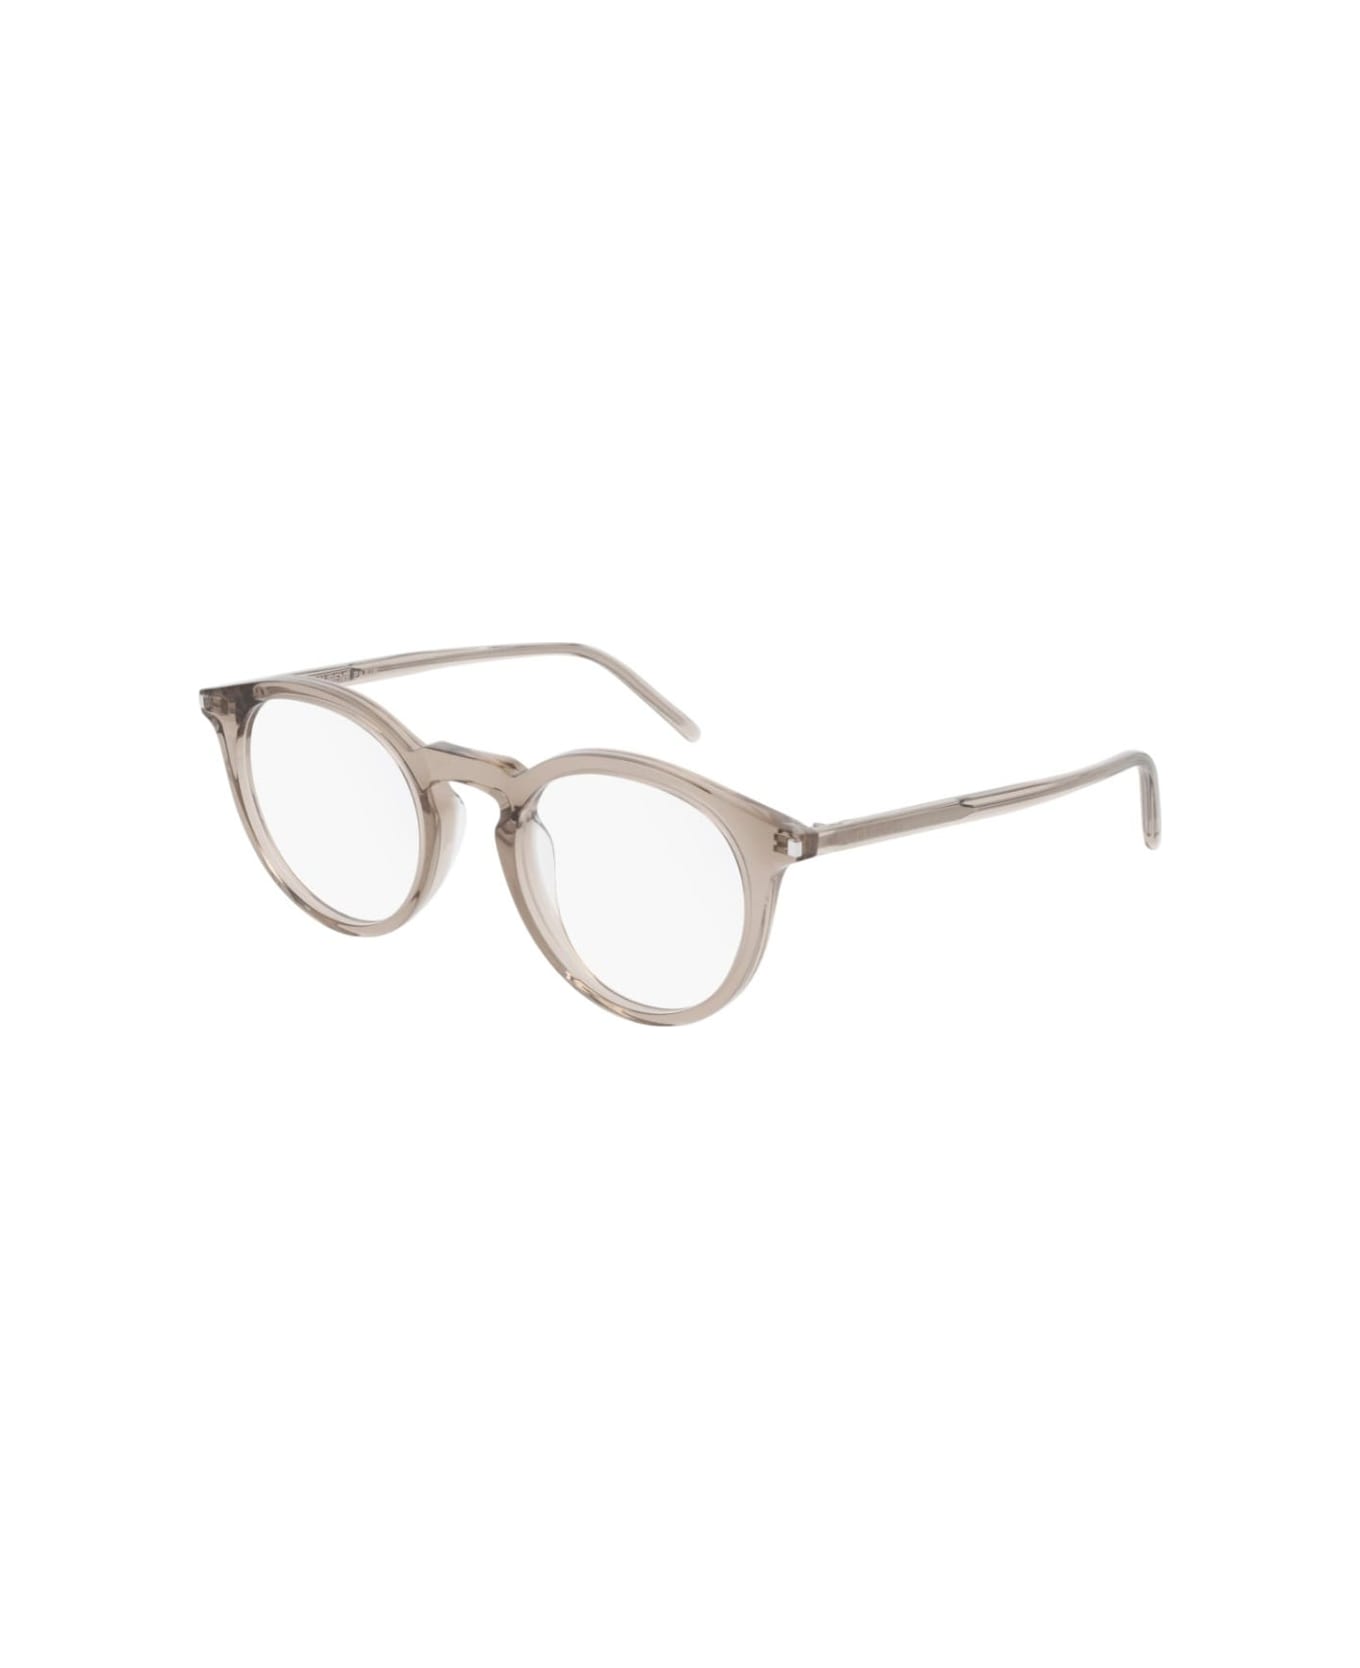 Saint Laurent Eyewear SL347 004 Glasses - Tortora